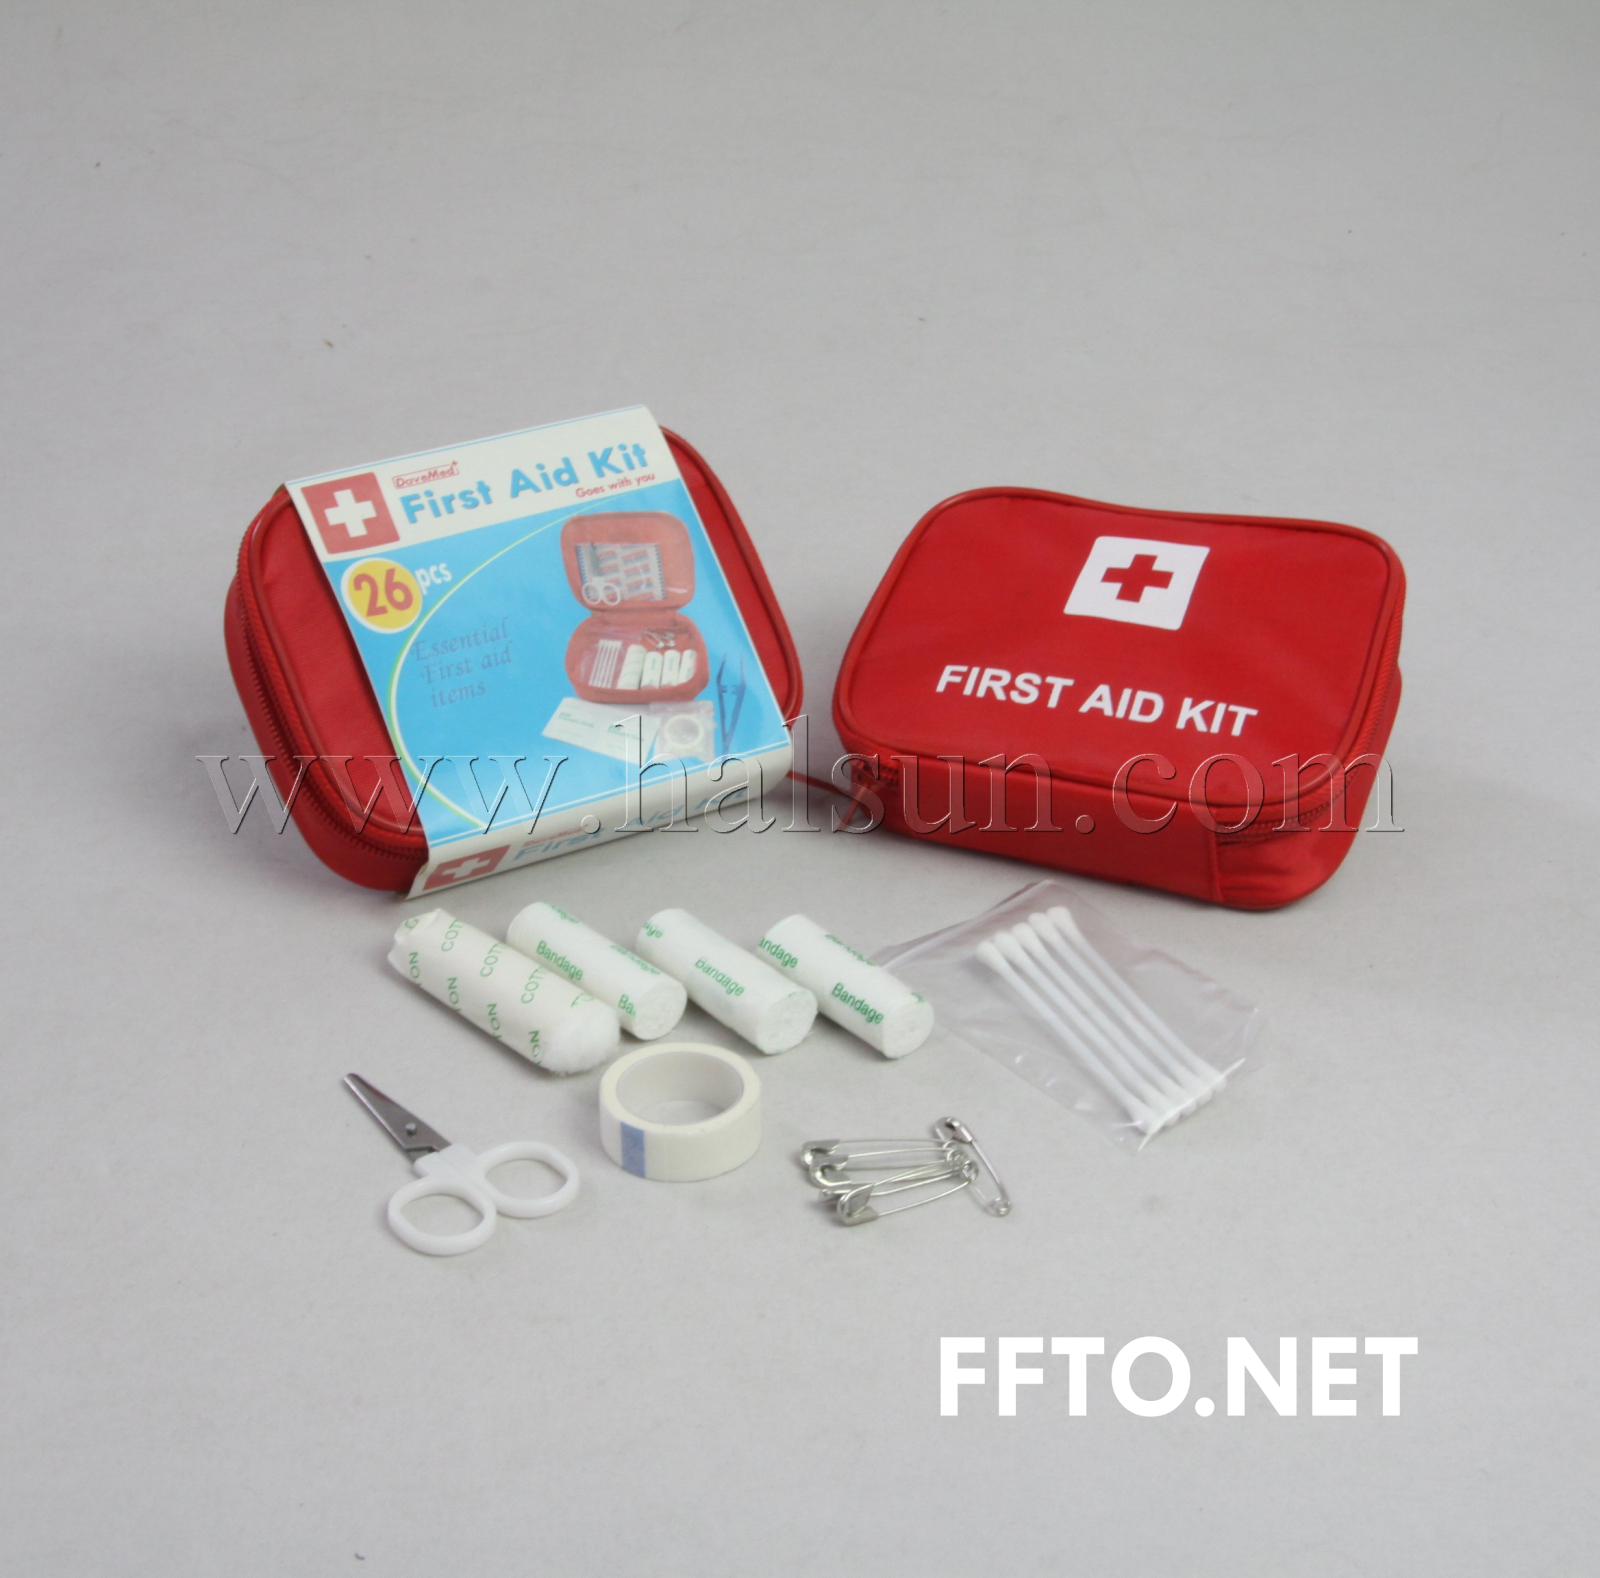 First Aid Kits,HSFAK045